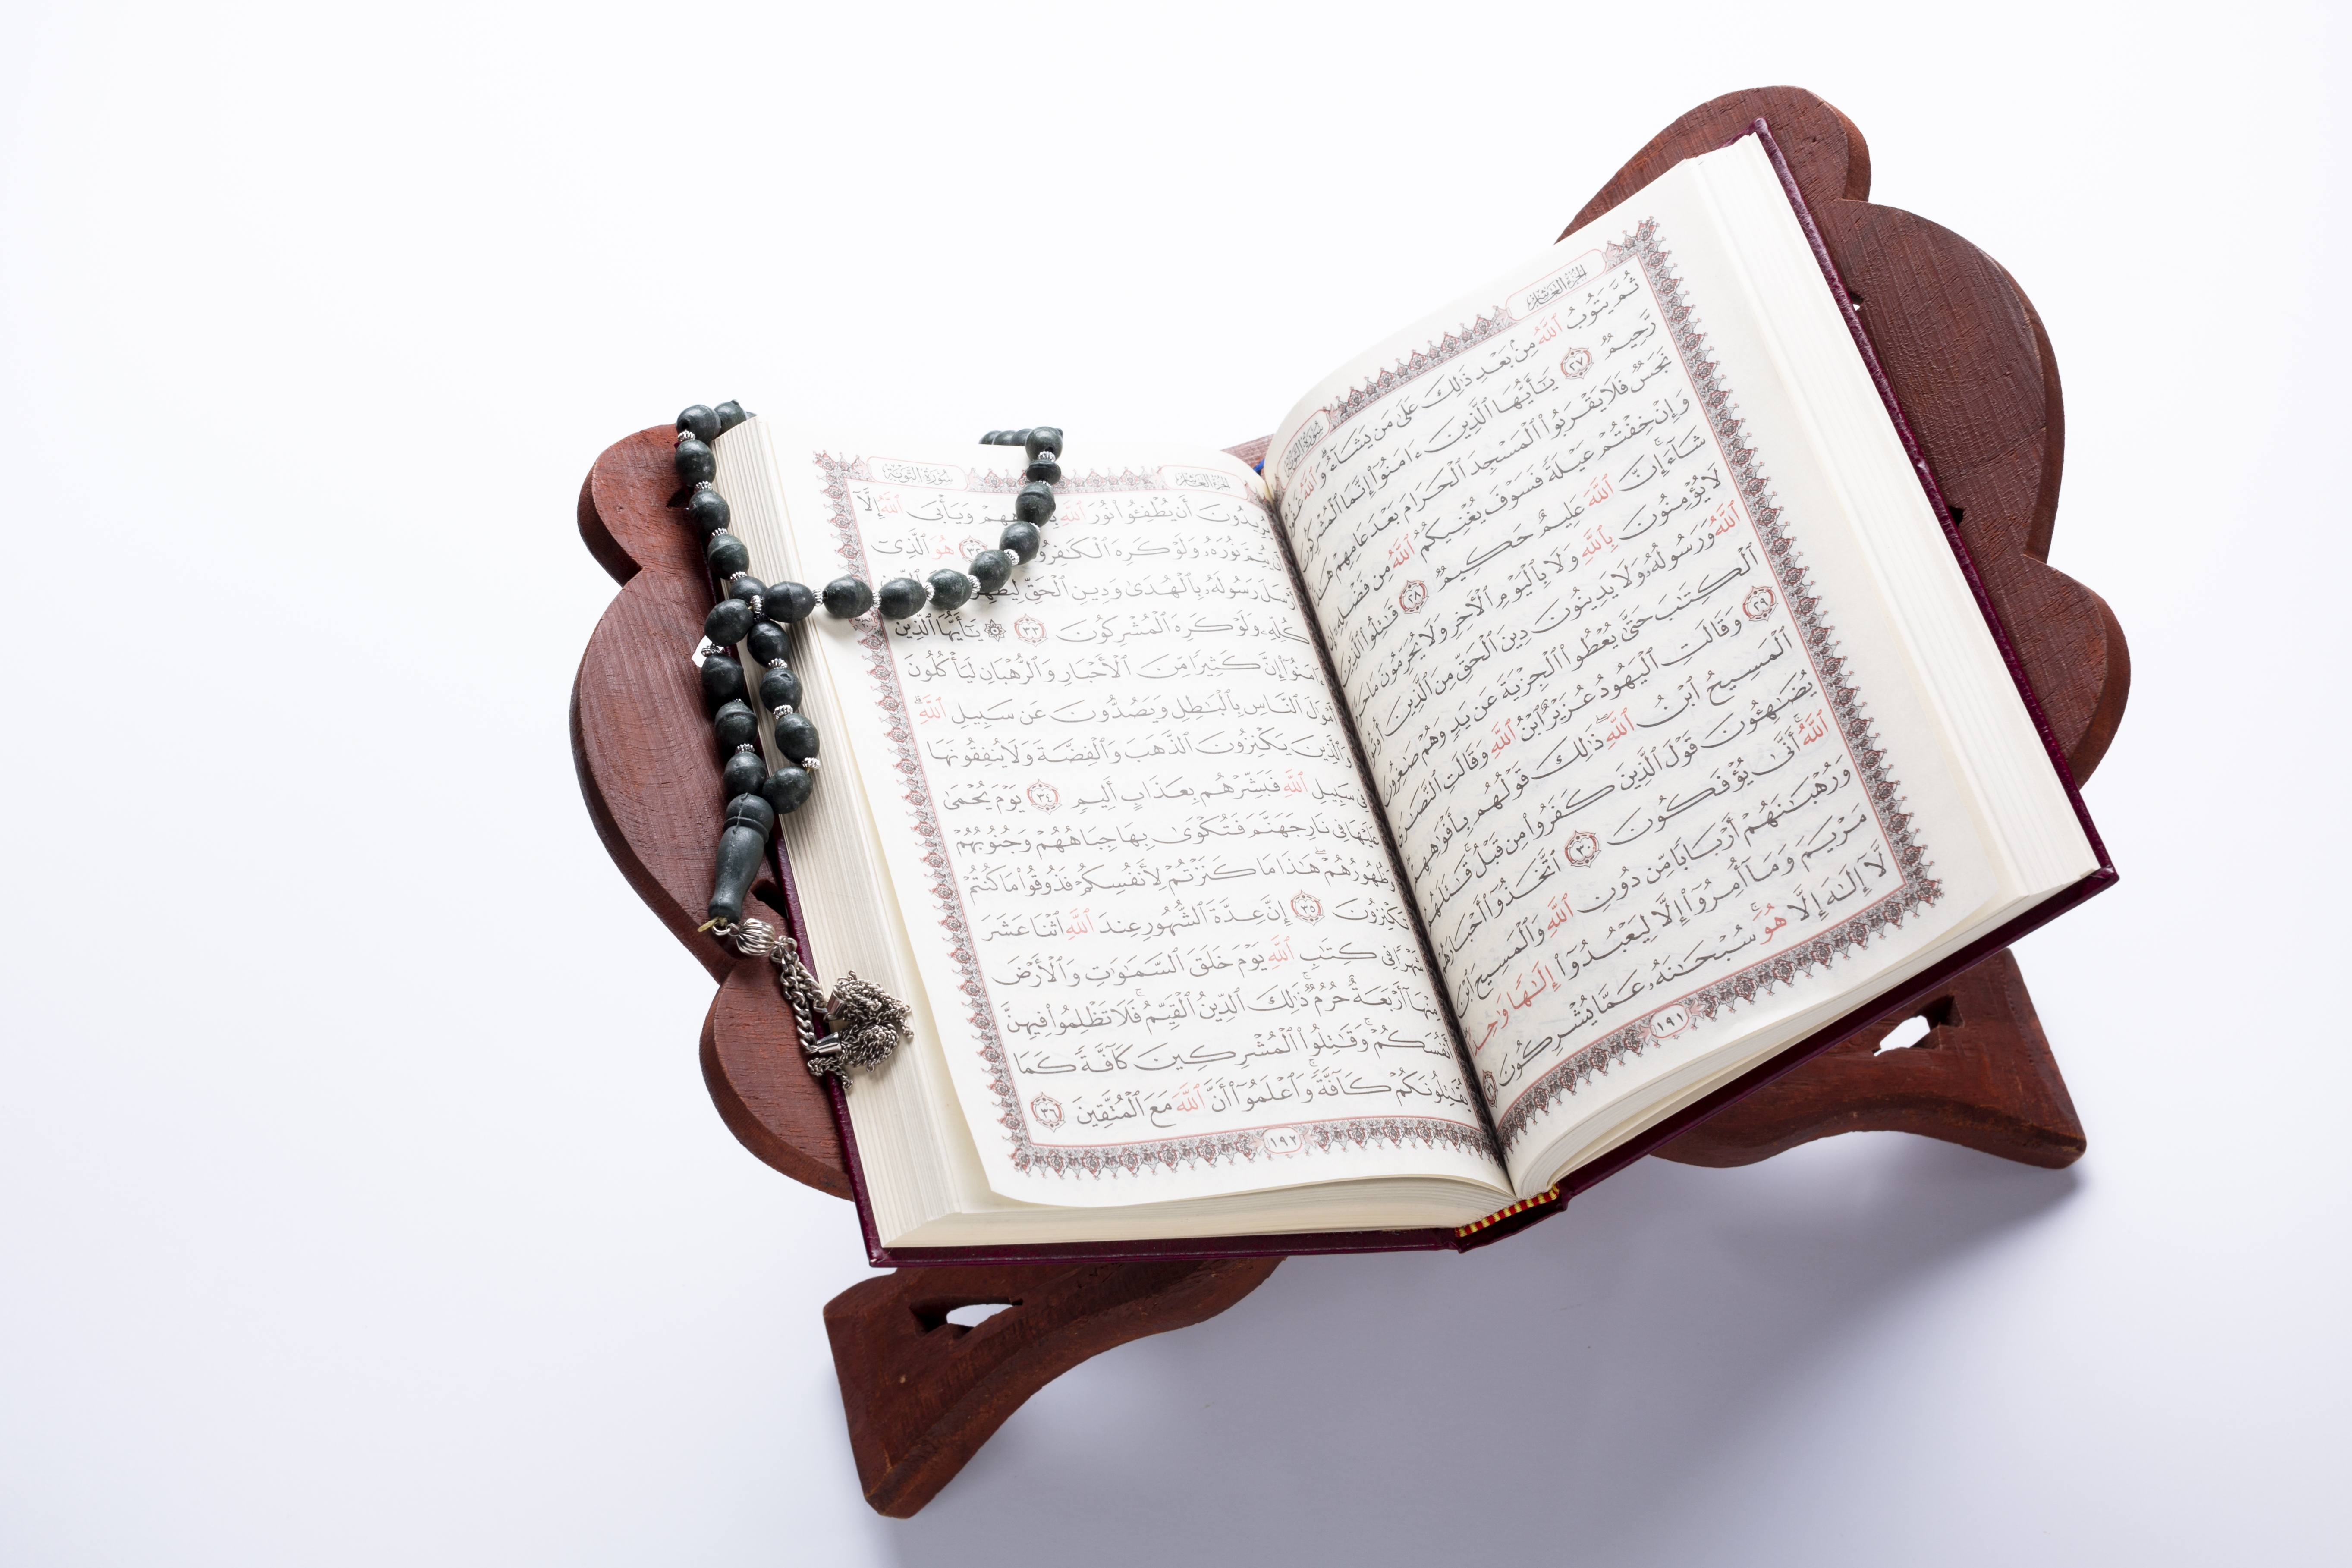 Nasihat Untuk Penghafal Al Quran 4 (Mungkinkah Orang Yang Lemah Kecerdasannya Menghafal Al Quran?)